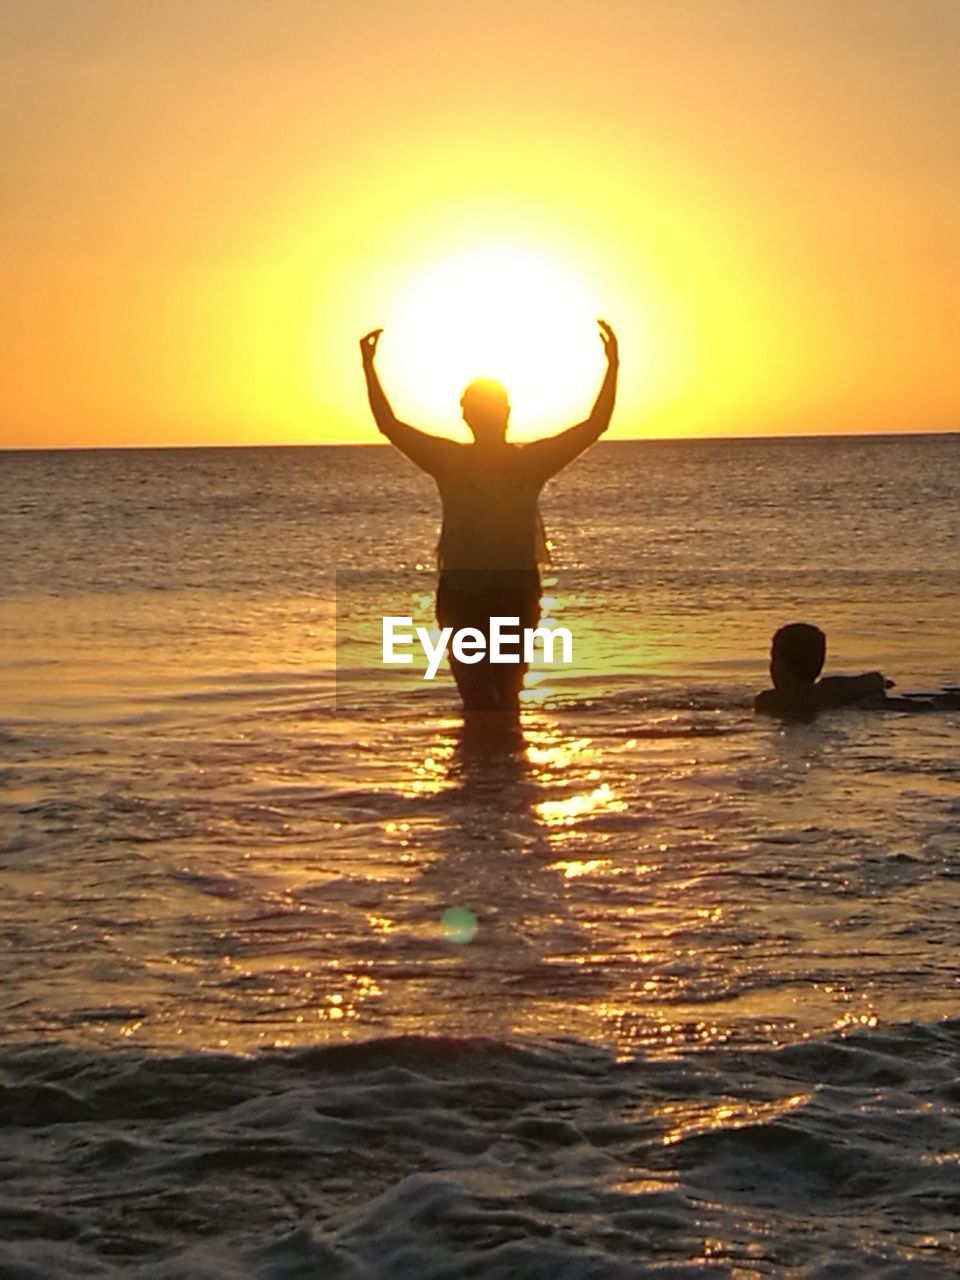 MAN STANDING ON BEACH AGAINST SUNSET SKY